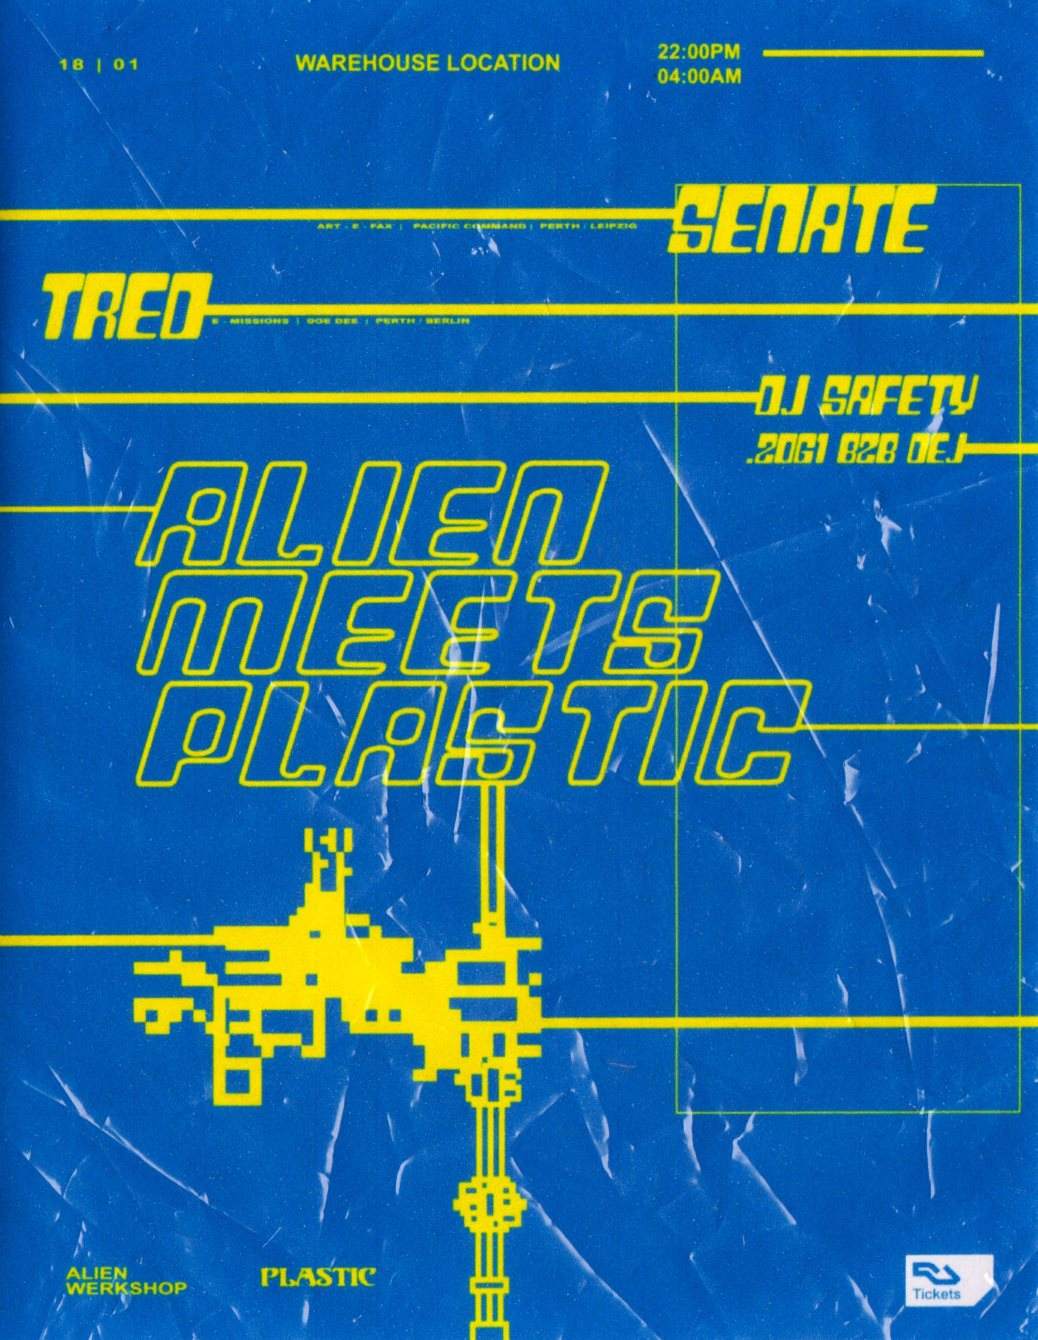 Alien Werkshop x Plastic Feat. Senate and Tred - Página frontal